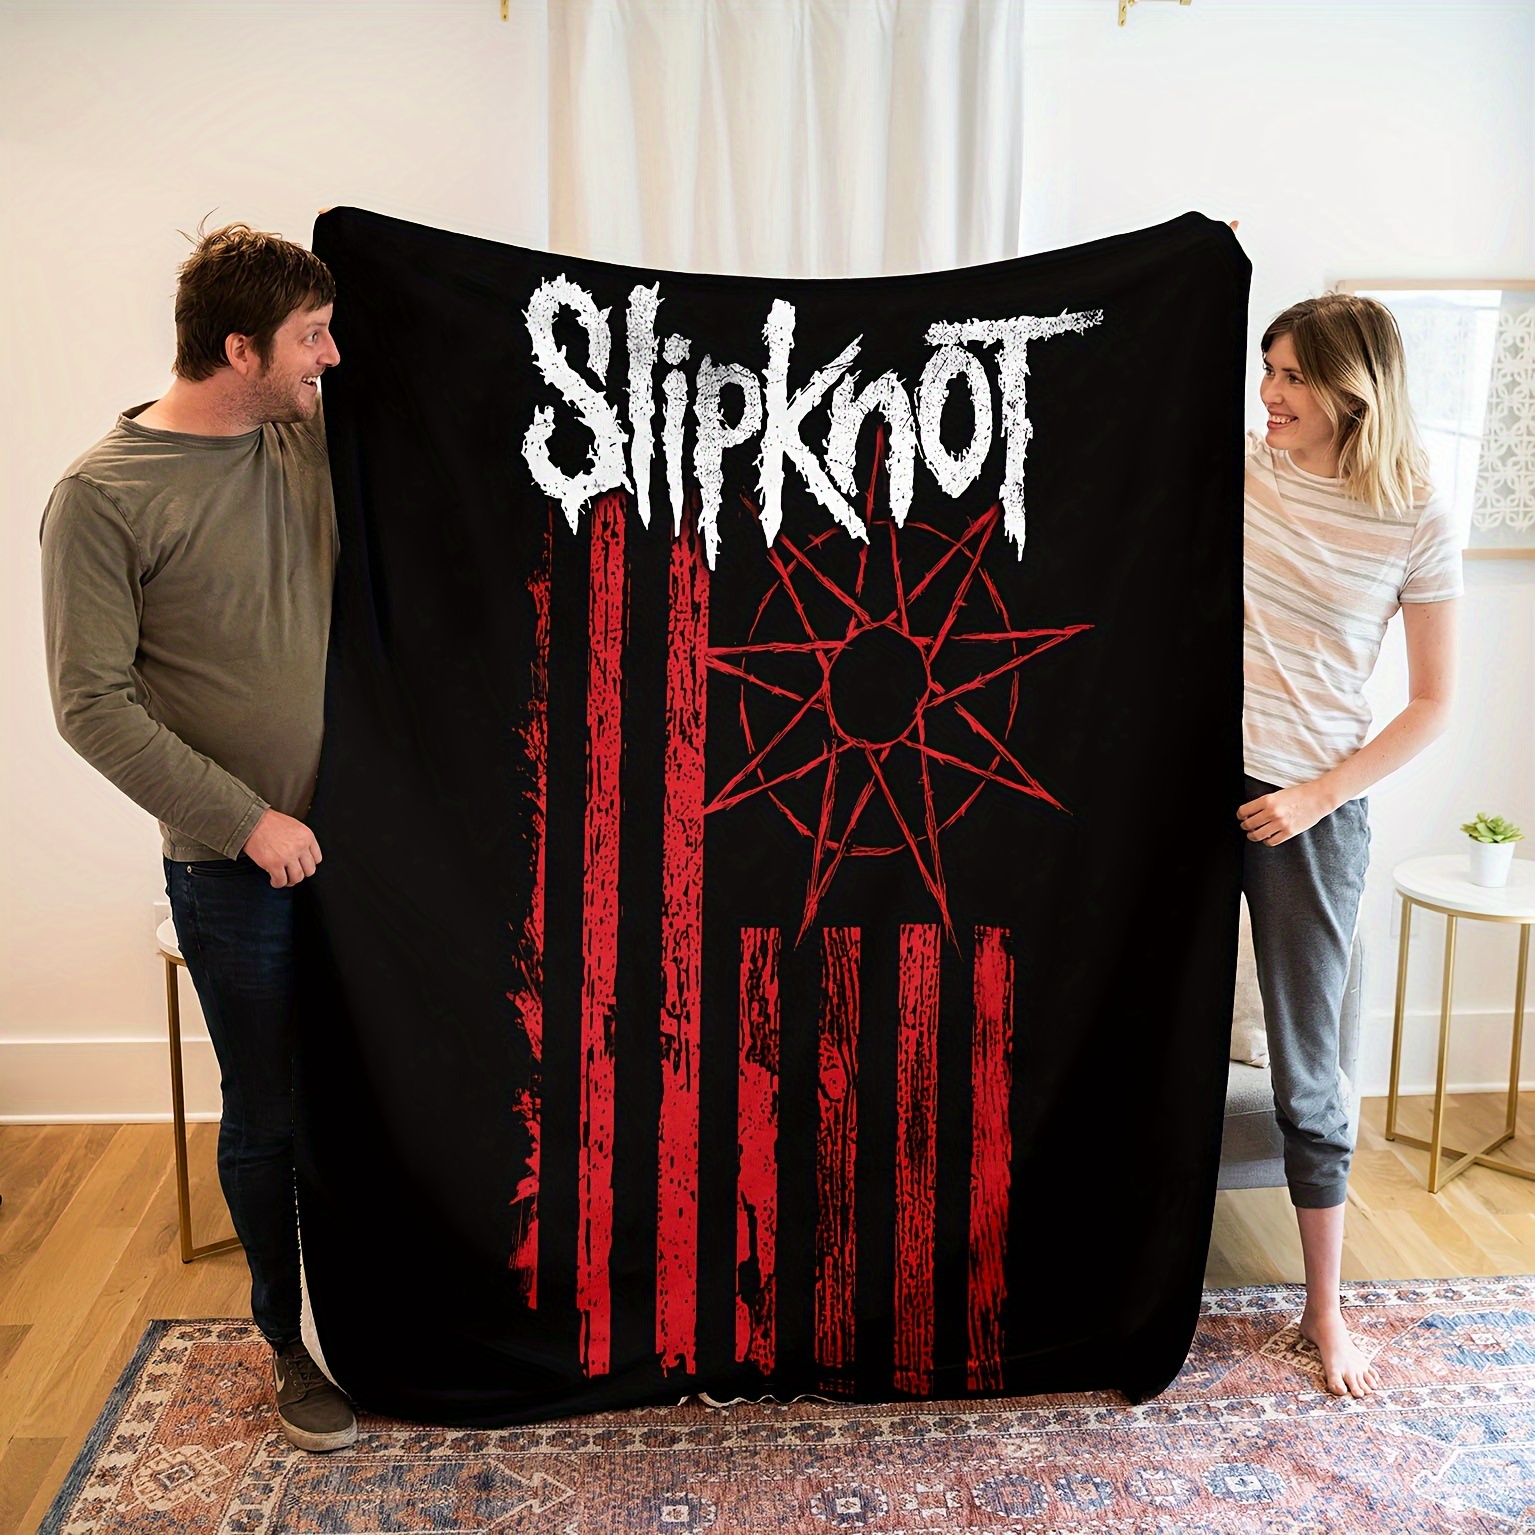 

1pc Slipknot Print Blanket, Flannel Blanket, Soft Warm Throw Blanket Nap Blanket For Couch Sofa Office Bed Camping Travel, Multi-purpose Gift Blanket For All Season